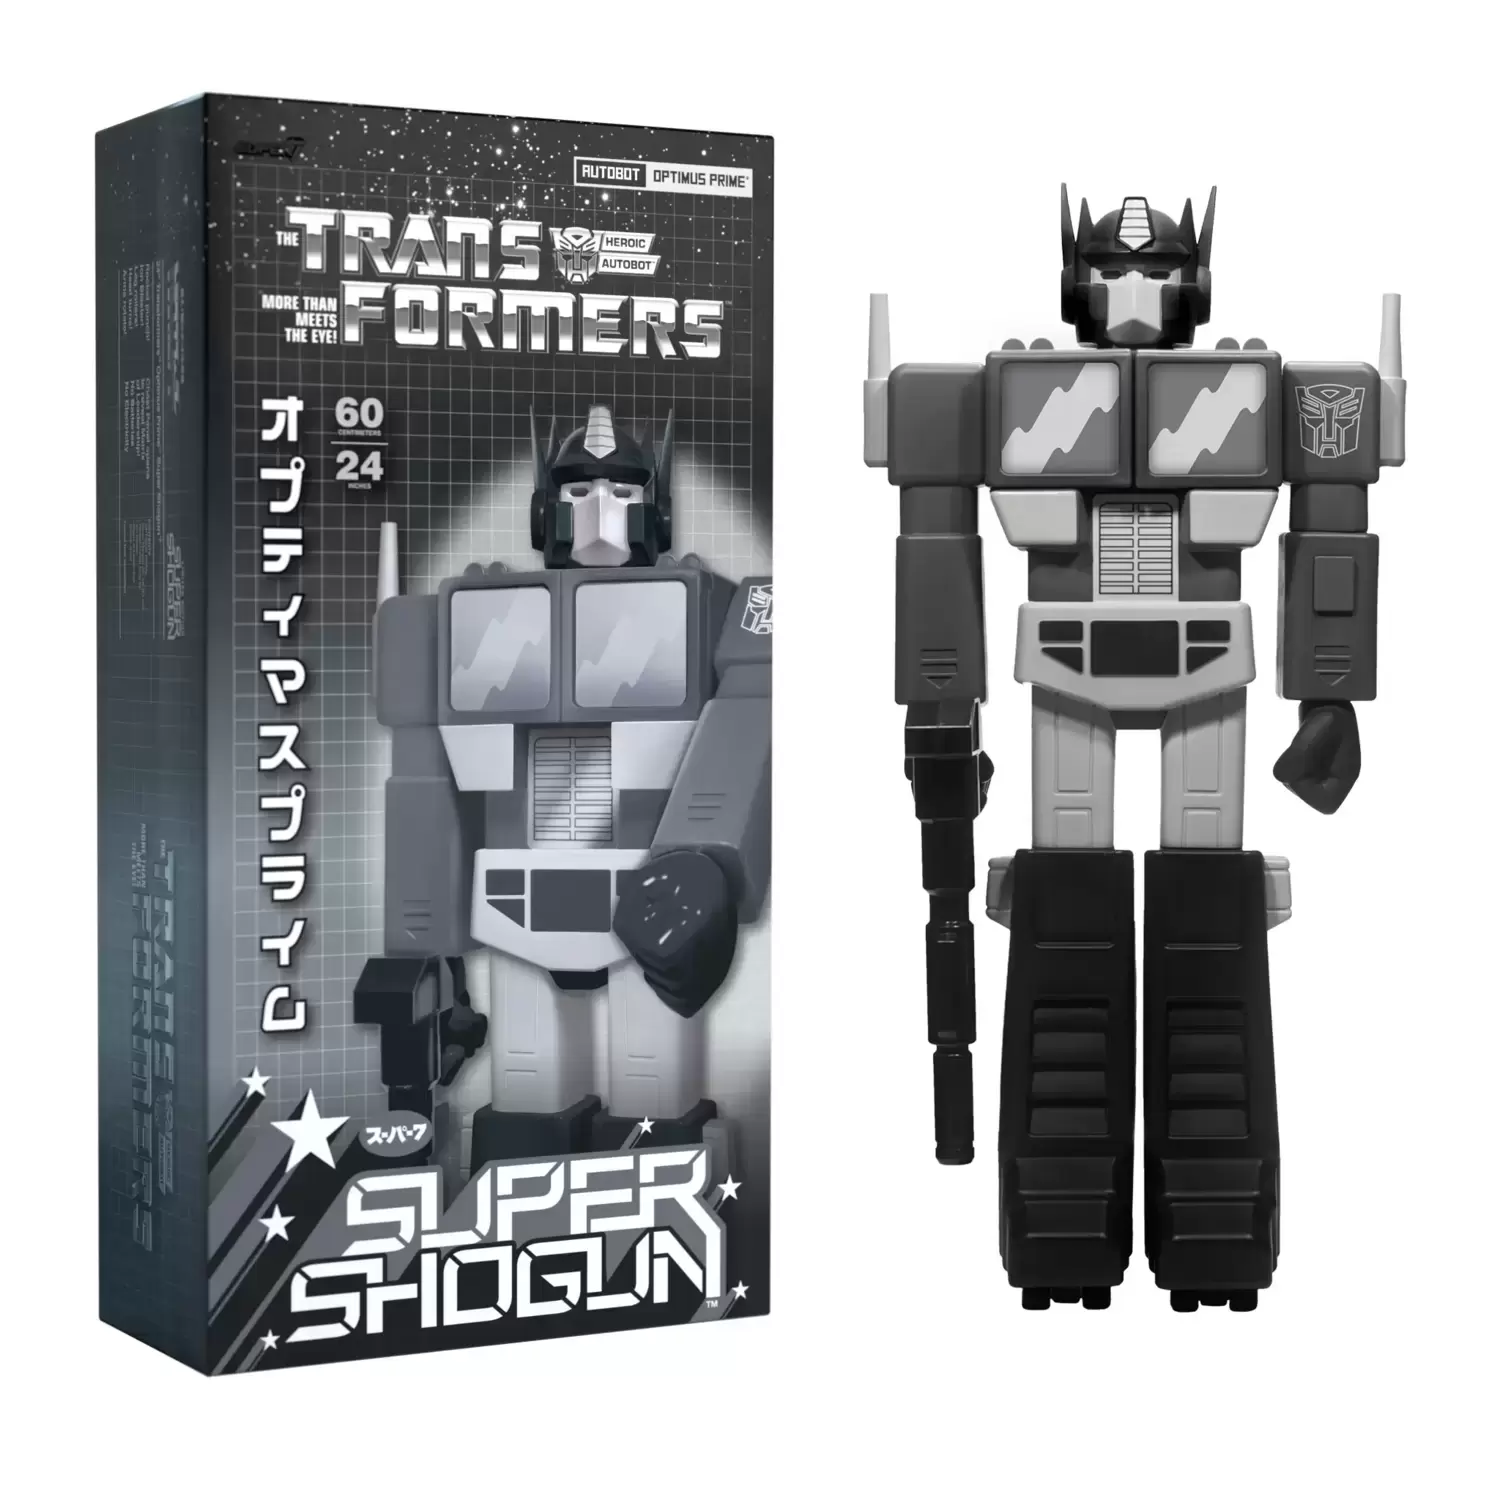 Super7 - Super Cyborgs - Transformers - Optimus Prime (Fallen Leader) - Super Shogun